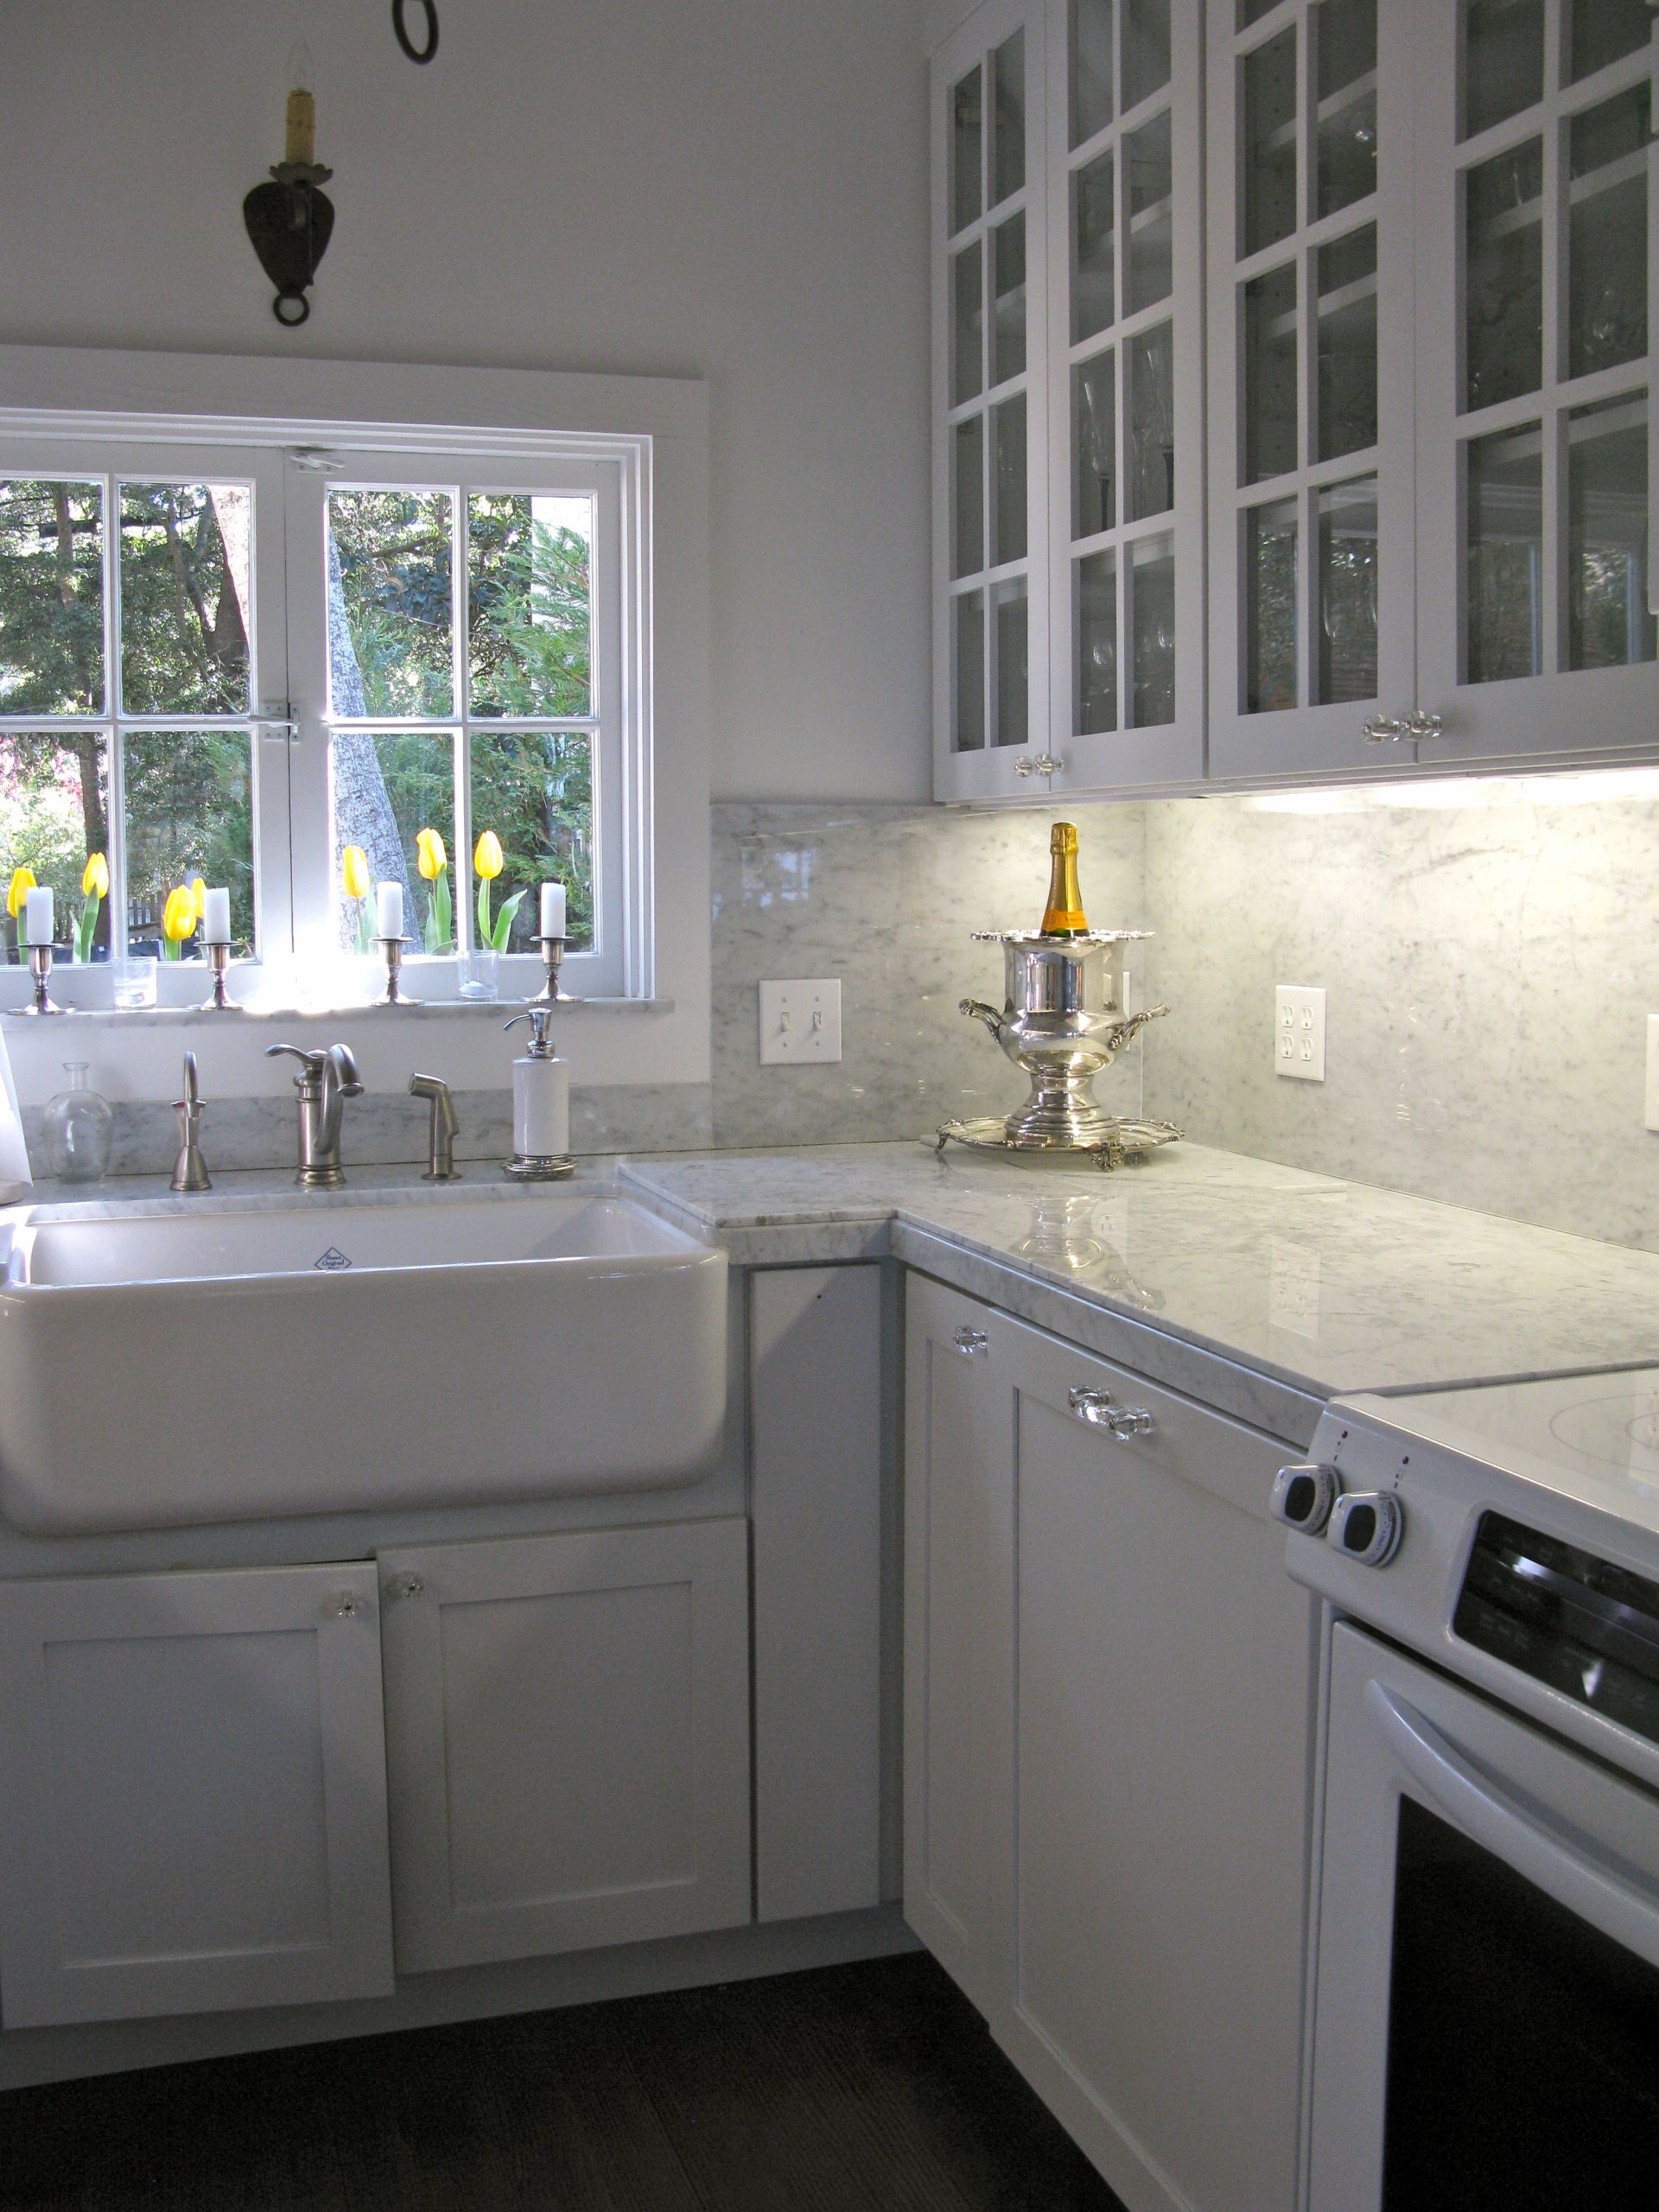 Kitchen Countertop And Backsplash Ideas
 Carrara Marble Backsplash Ideas – HomesFeed